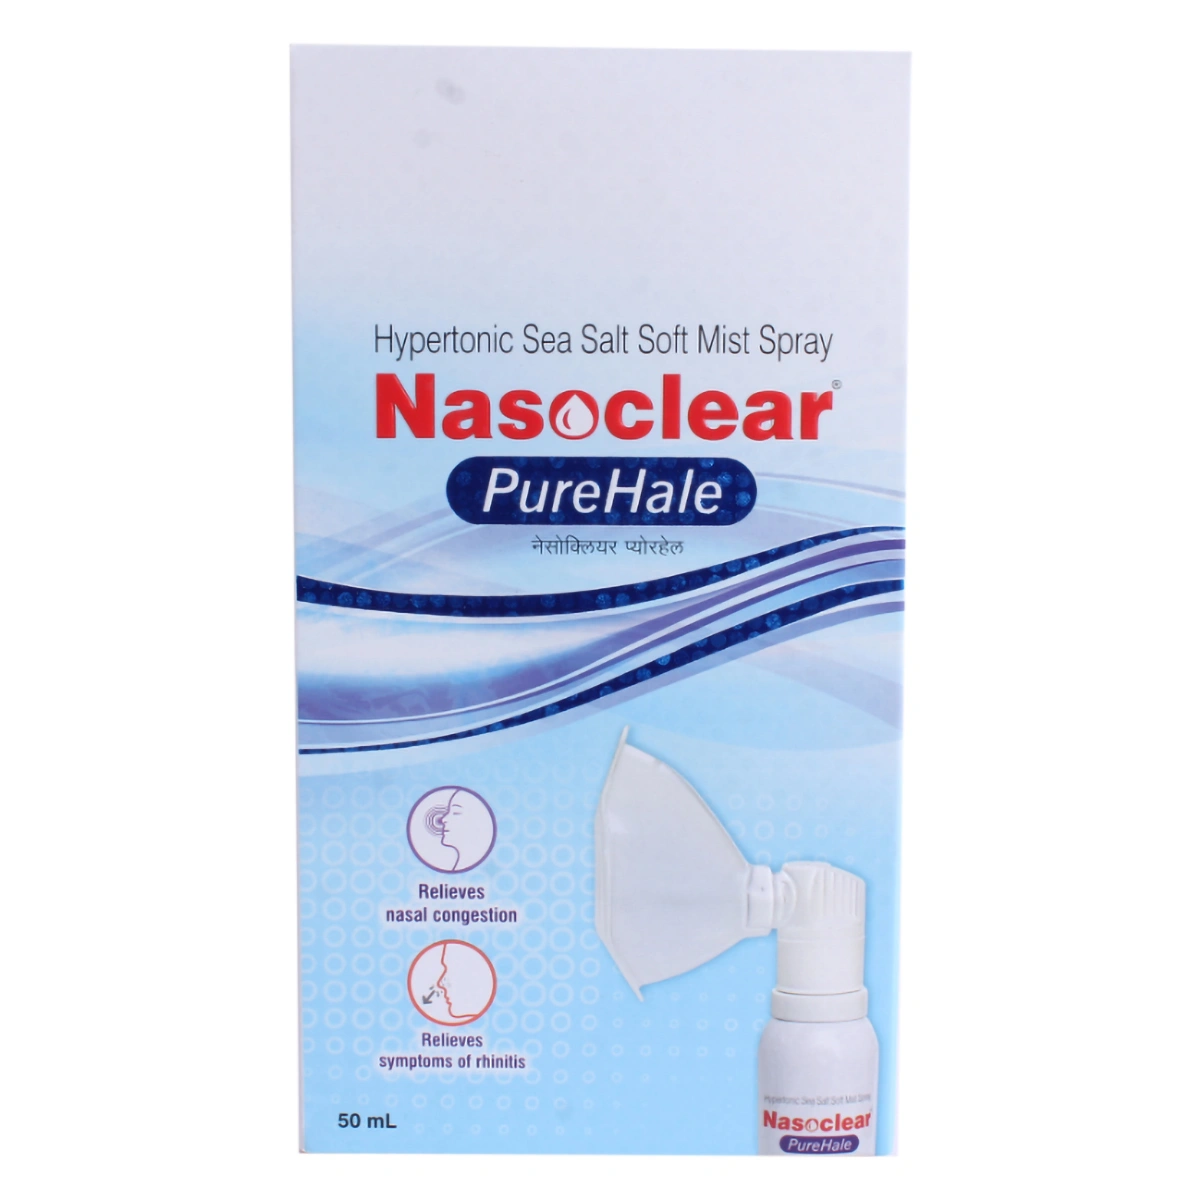 Nasoclear Purehale Spray | Relieves Nasal Congestion & Symptoms of Rhinitis